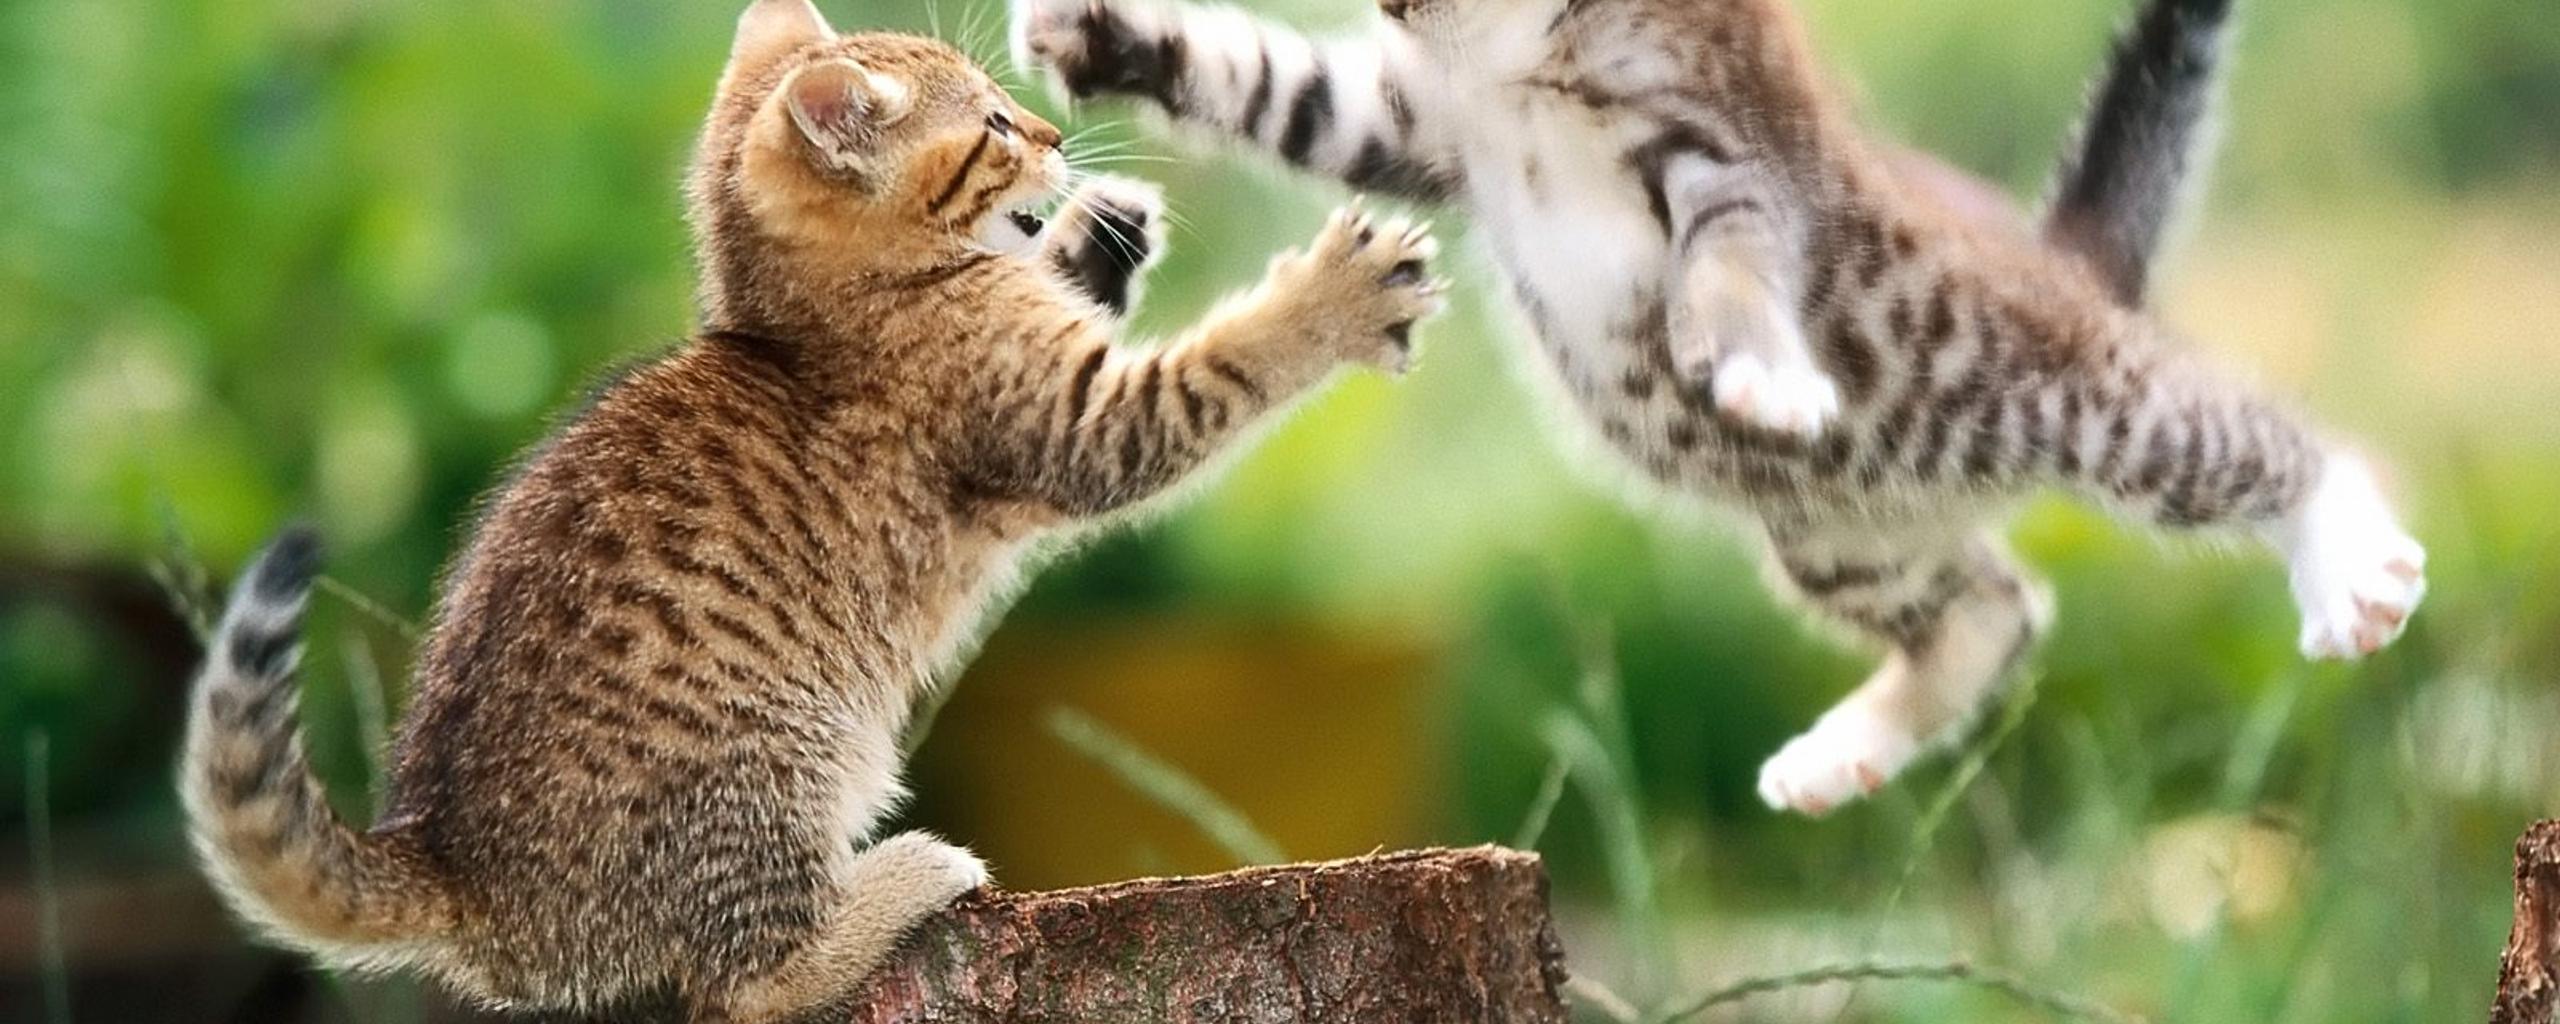 Fight between two sweet little cats - HD wallpaper